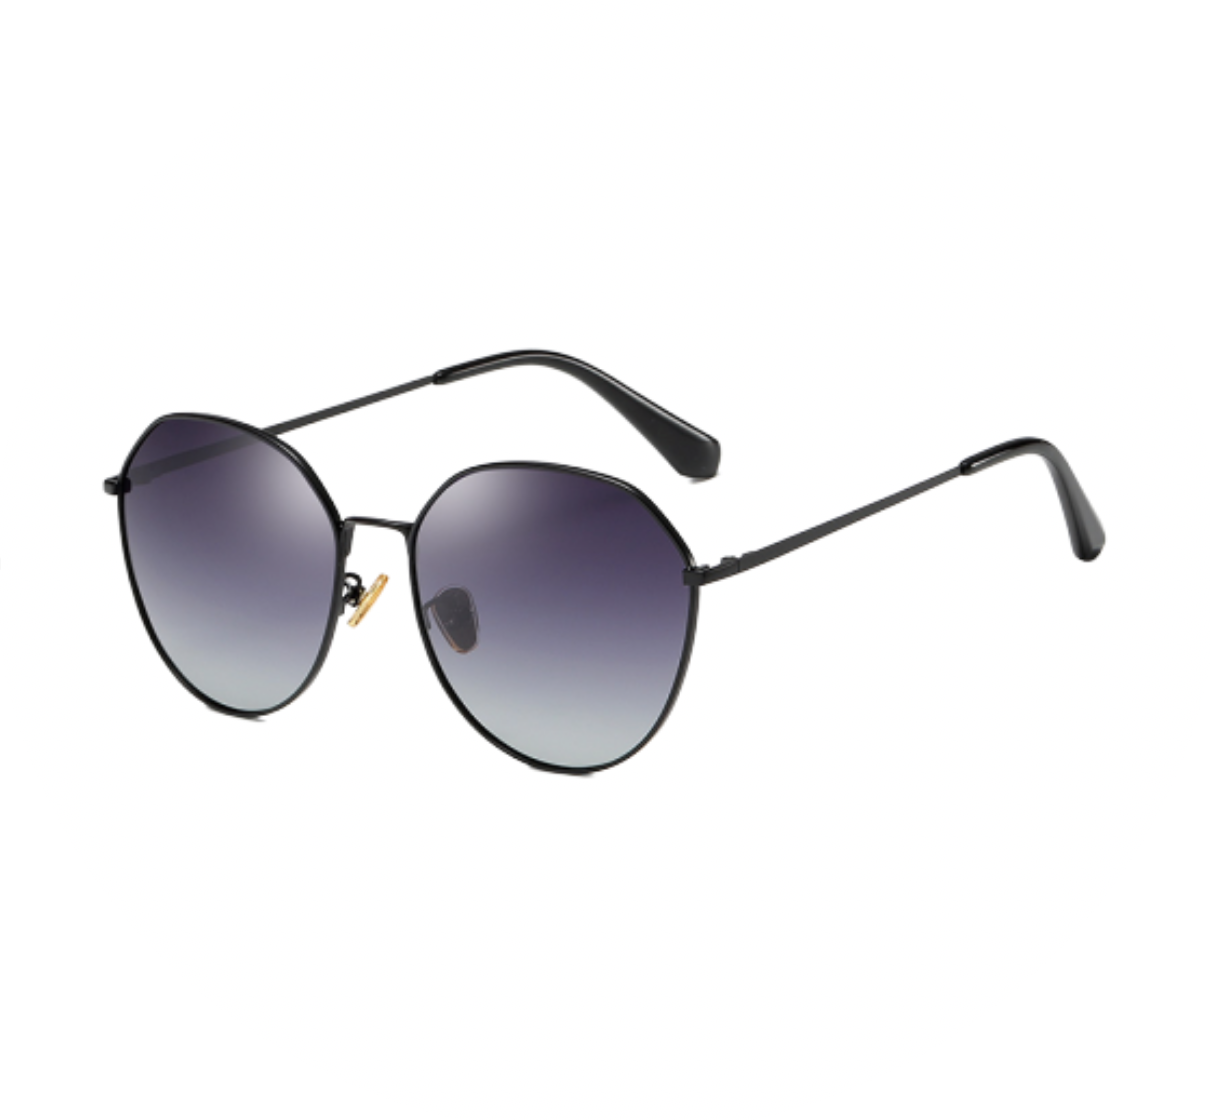 Sunglasses Manufacturer in China - Factorie Sunglasses - Women’s Retro Sunglasses